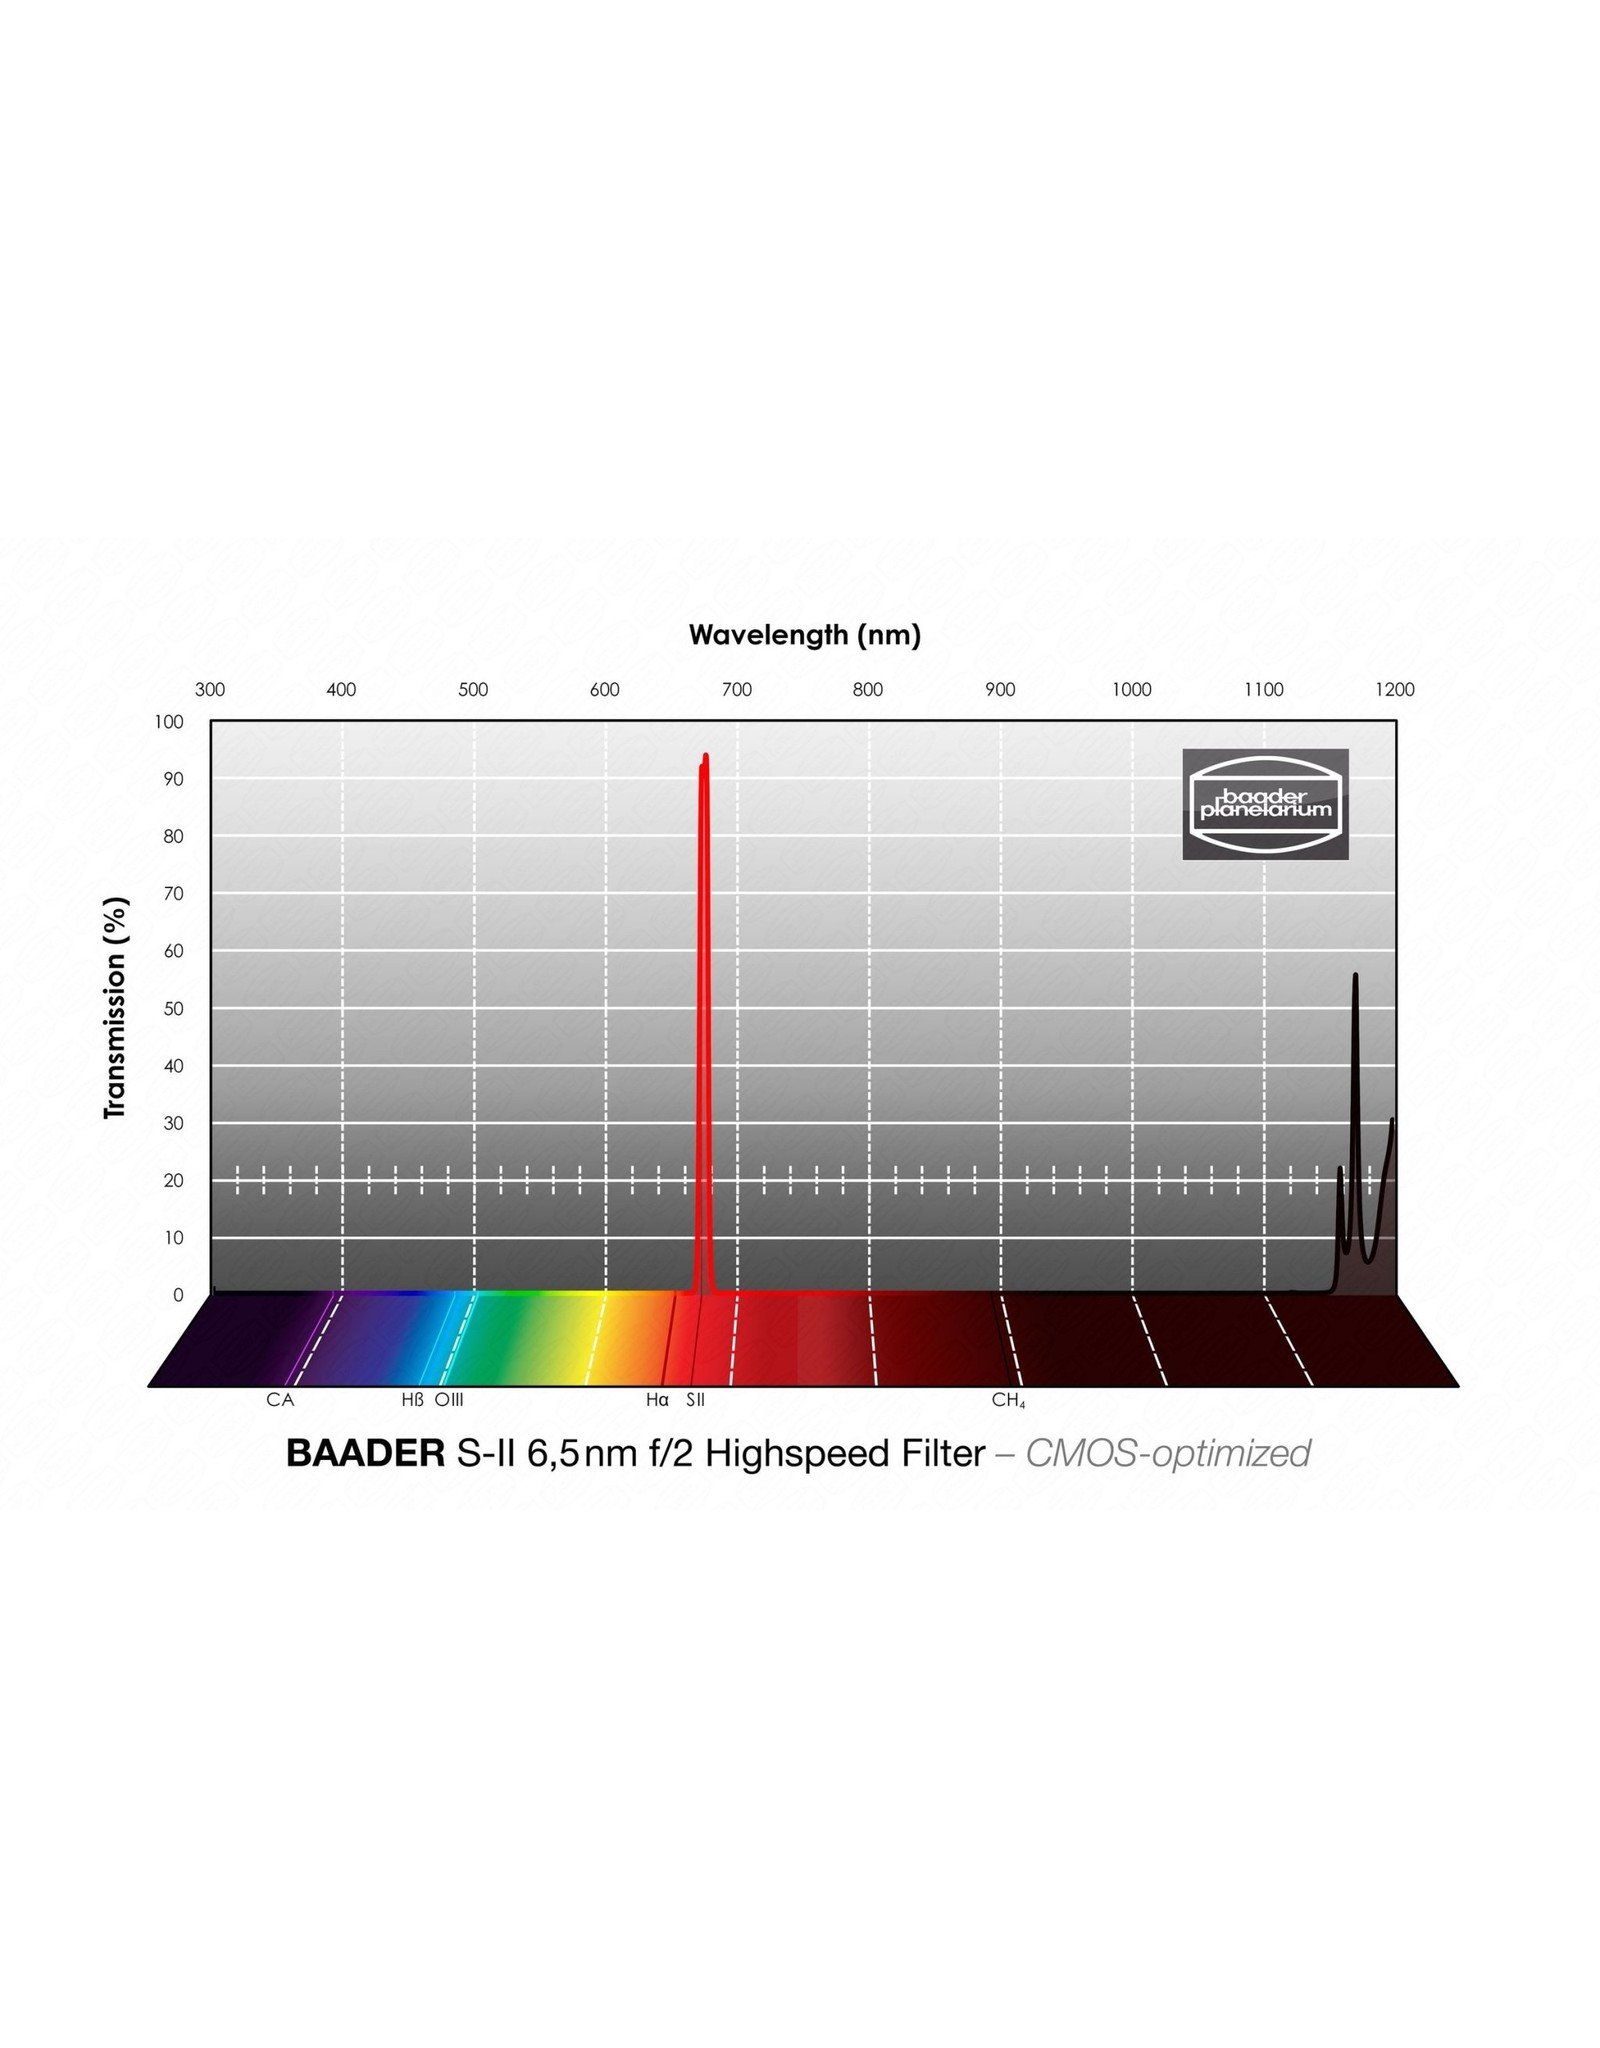 Baader Planetarium Baader 6.5nm Narrowband Filter set – CMOS-optimized - H-alpha, O-III, S-11 (Specify Size)